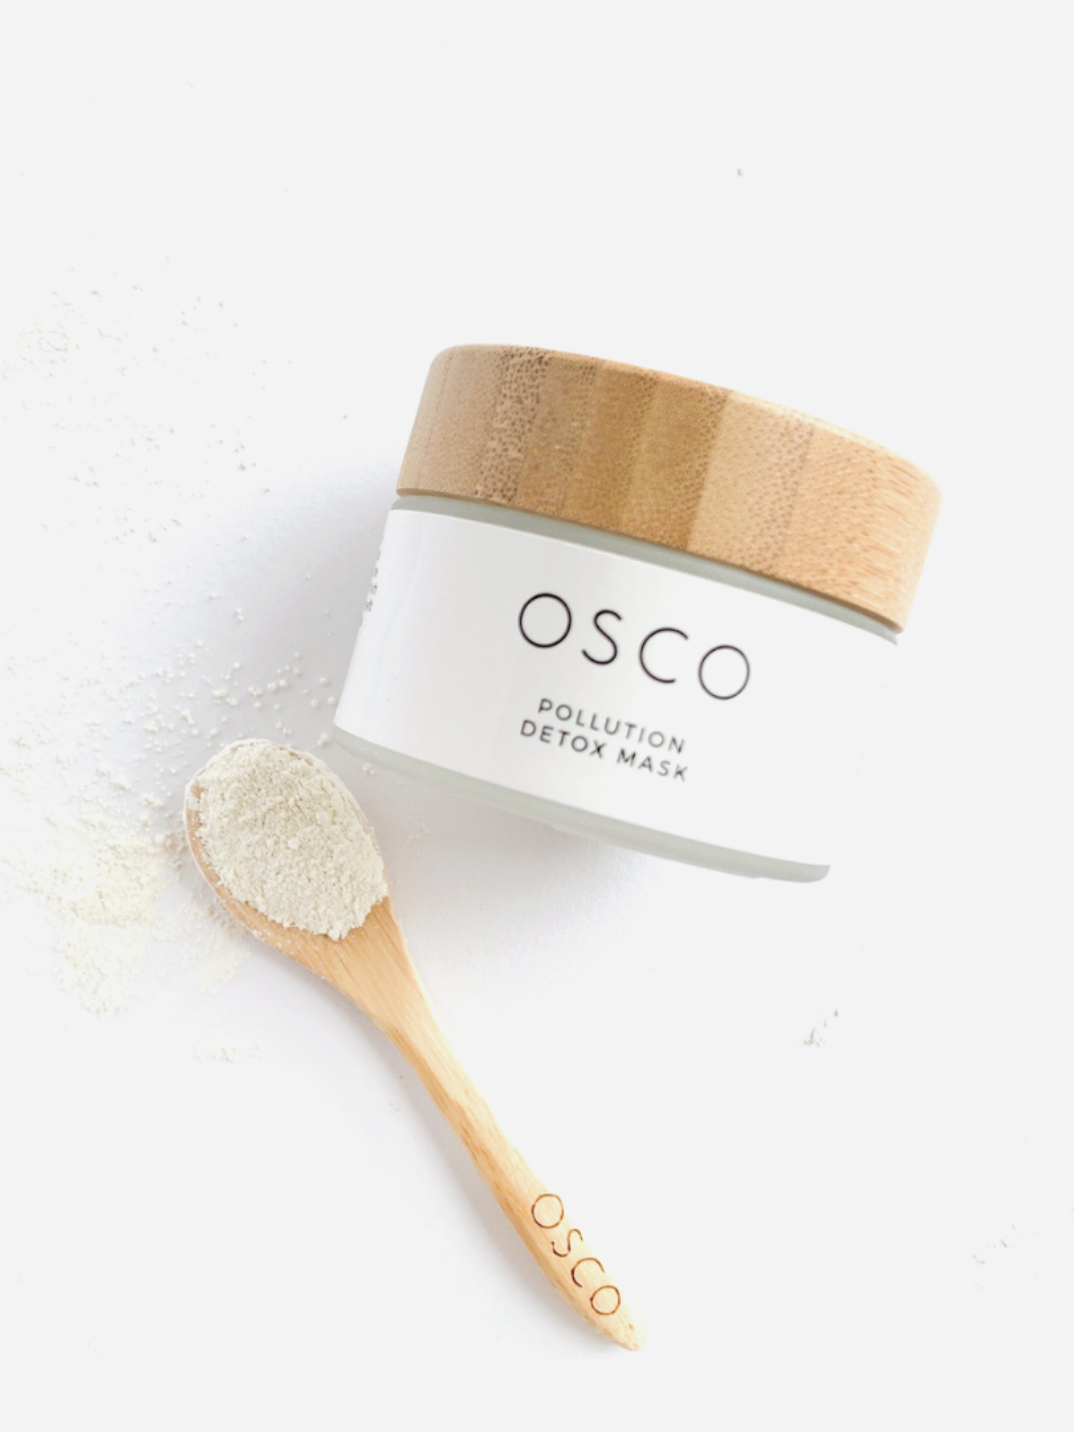 OSCO pollution defense mask that detoxifies skin 2020 The Beauty Shortlist Awards "BEST FACE MASK – detox WINNER" 